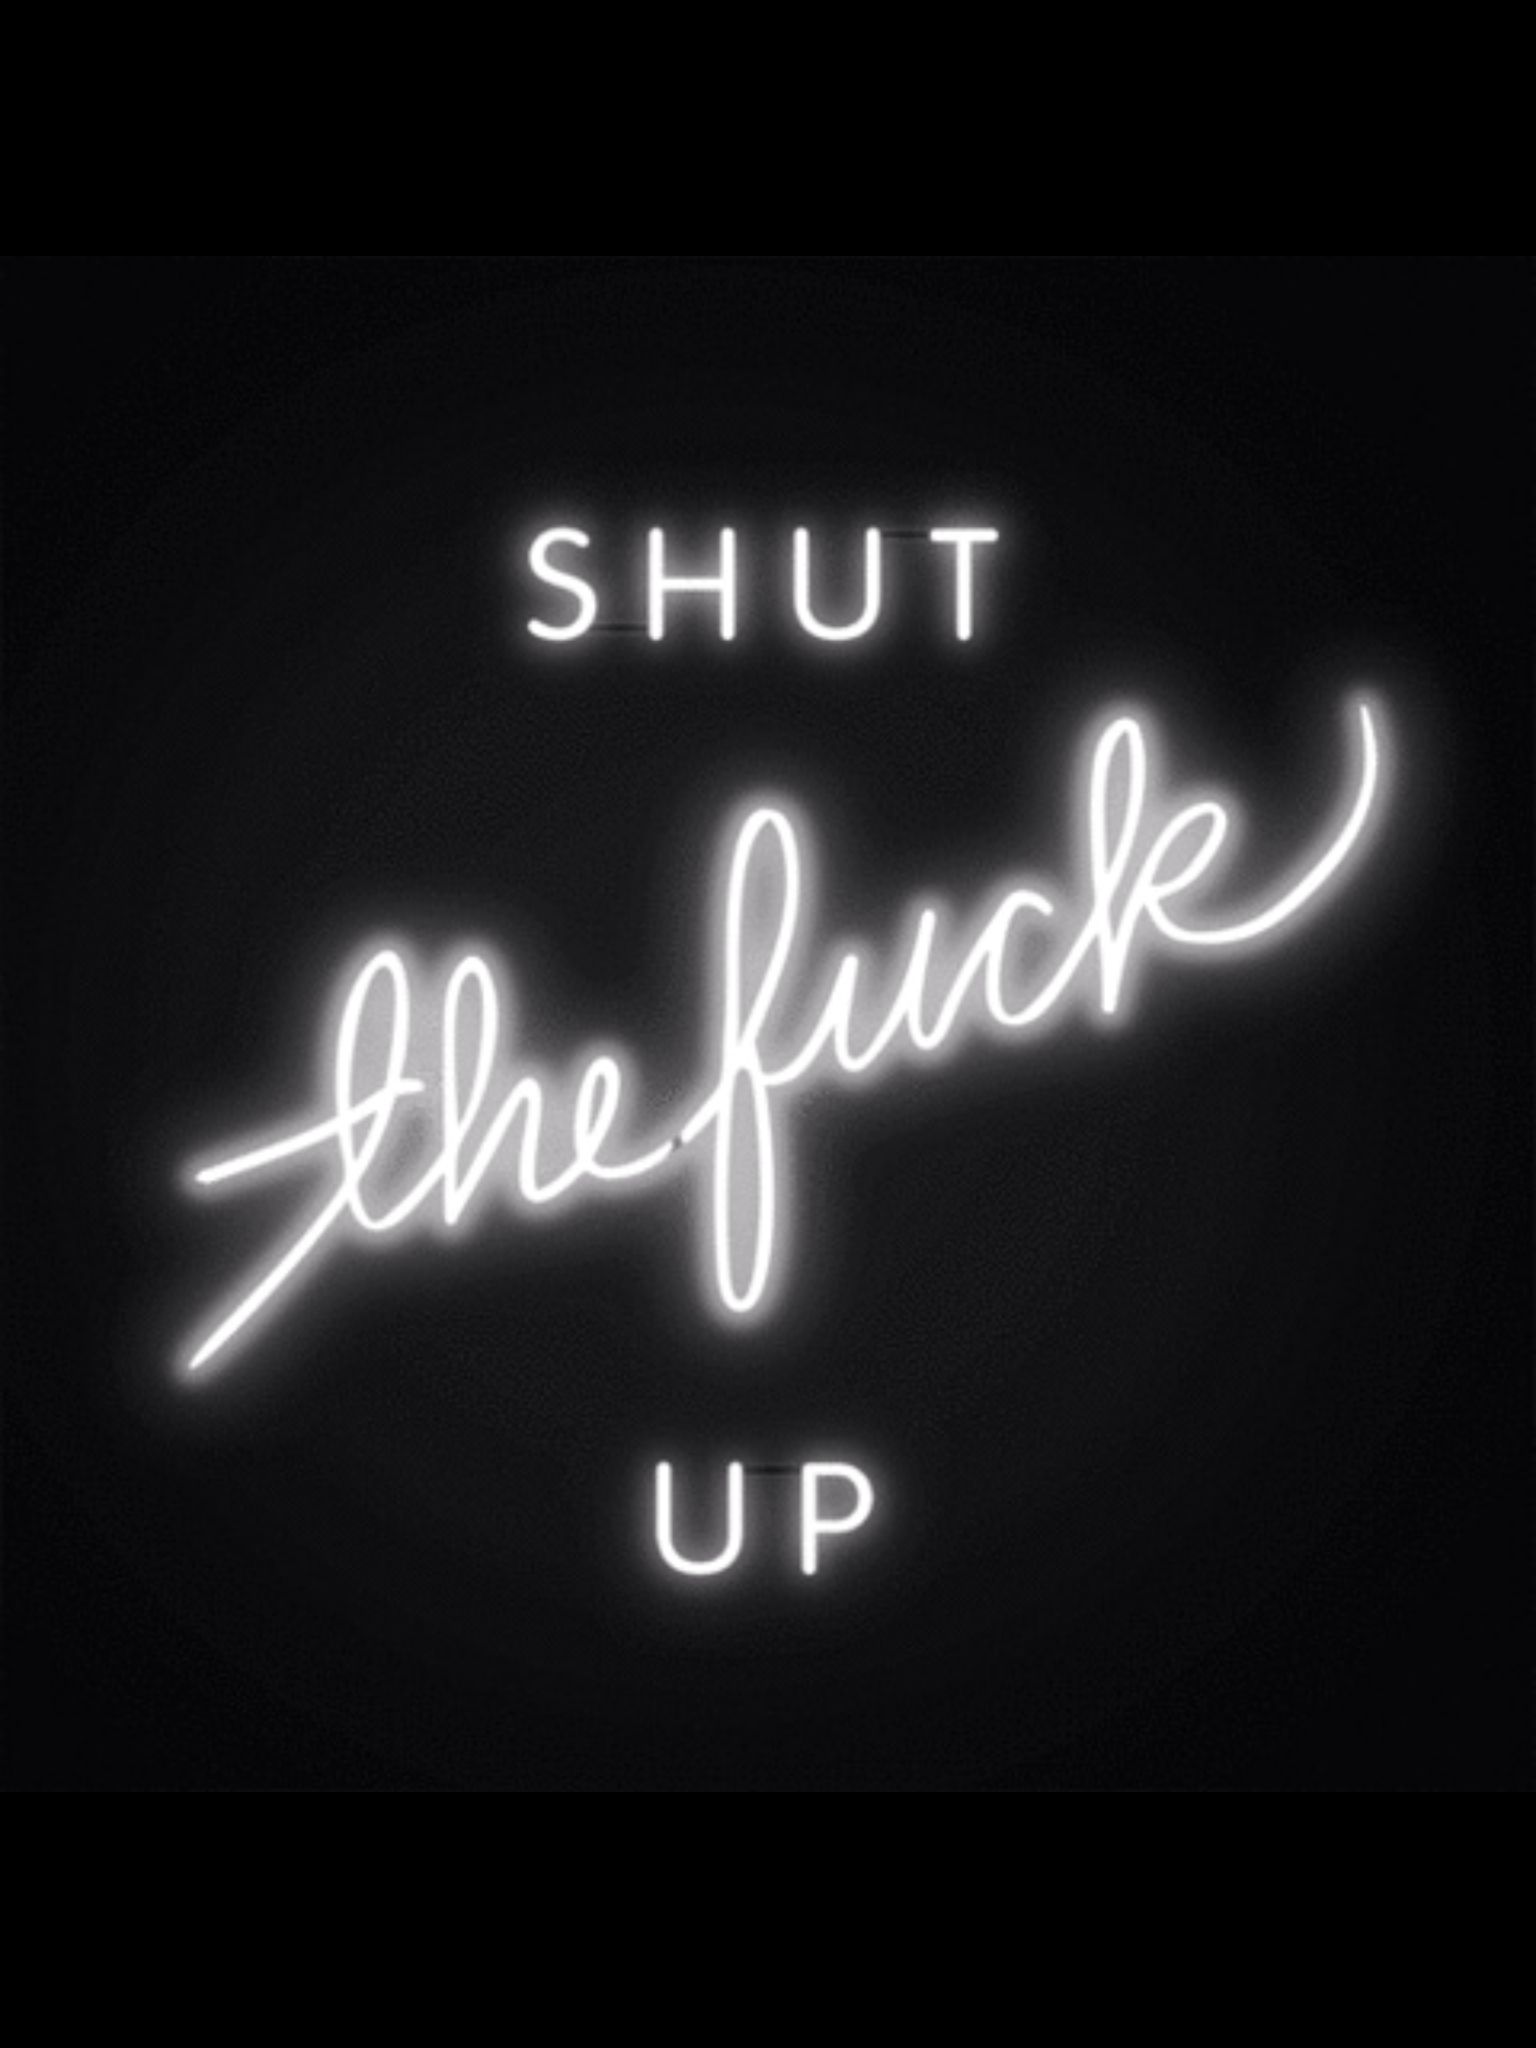 Stfu - Shut The Fuck Up Neon Sign , HD Wallpaper & Backgrounds